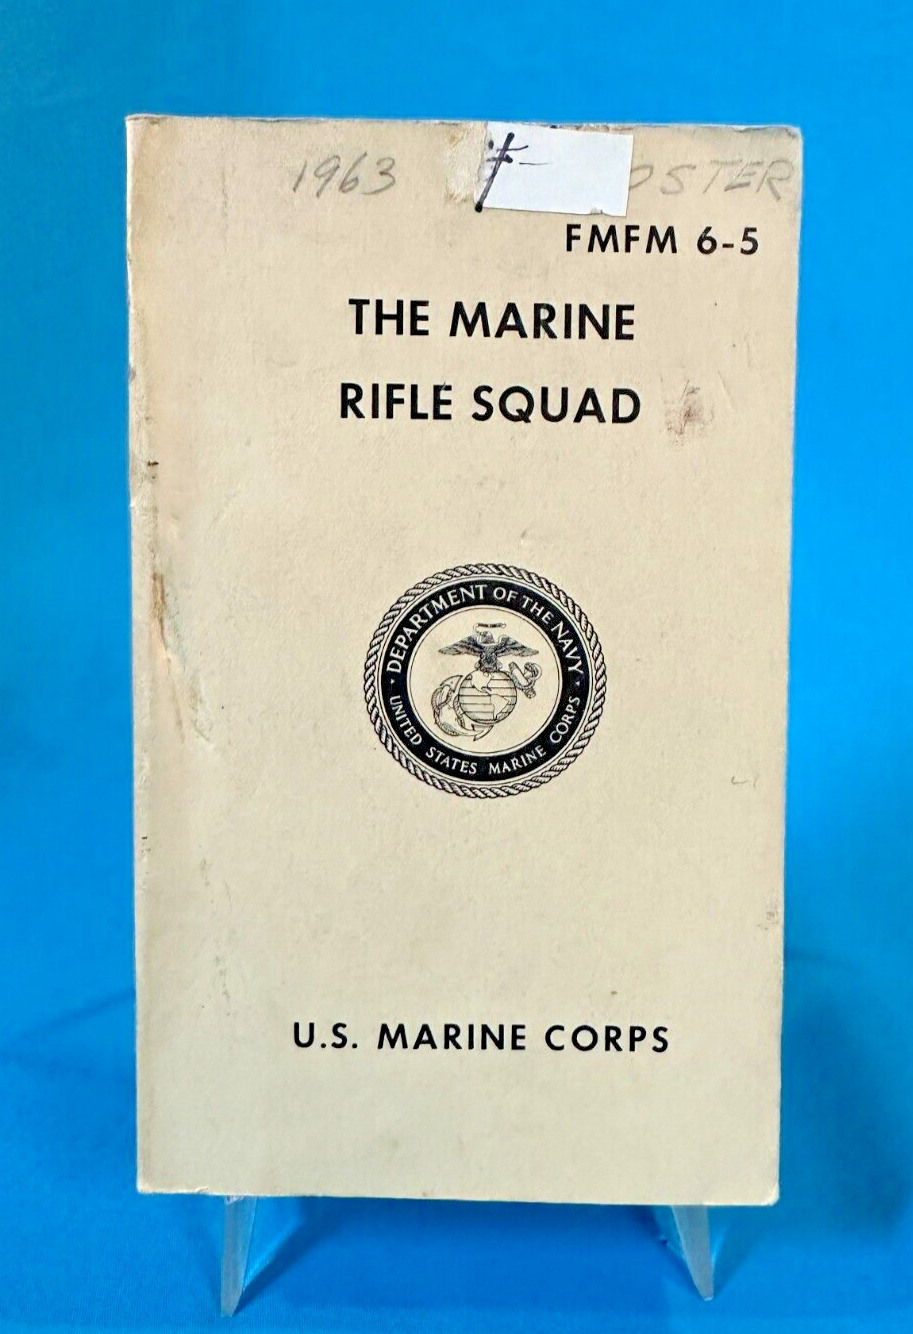 US Marine Corp FMFM 6-5 THE MARINE RIFLE SQUAD SC/623p/1963